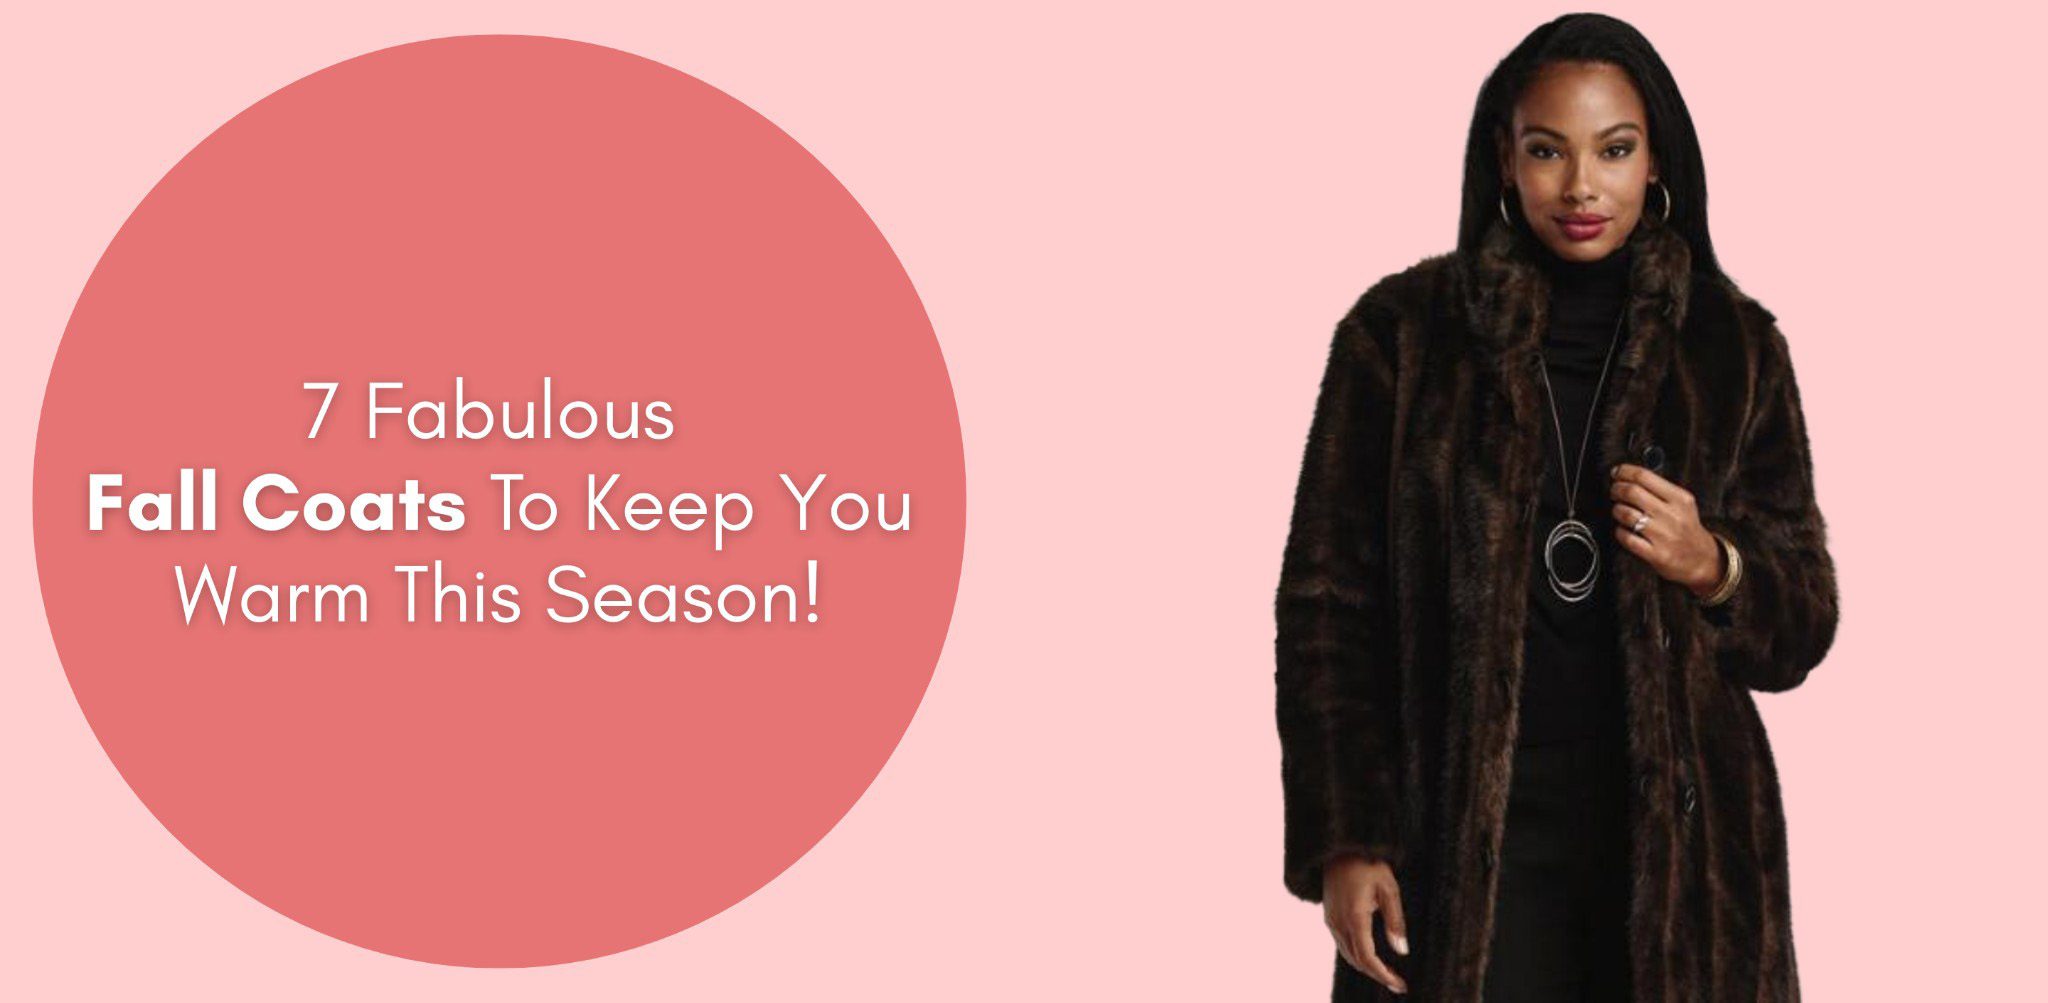 7 Fabulous Fall Coats To Keep You Warm This Season!